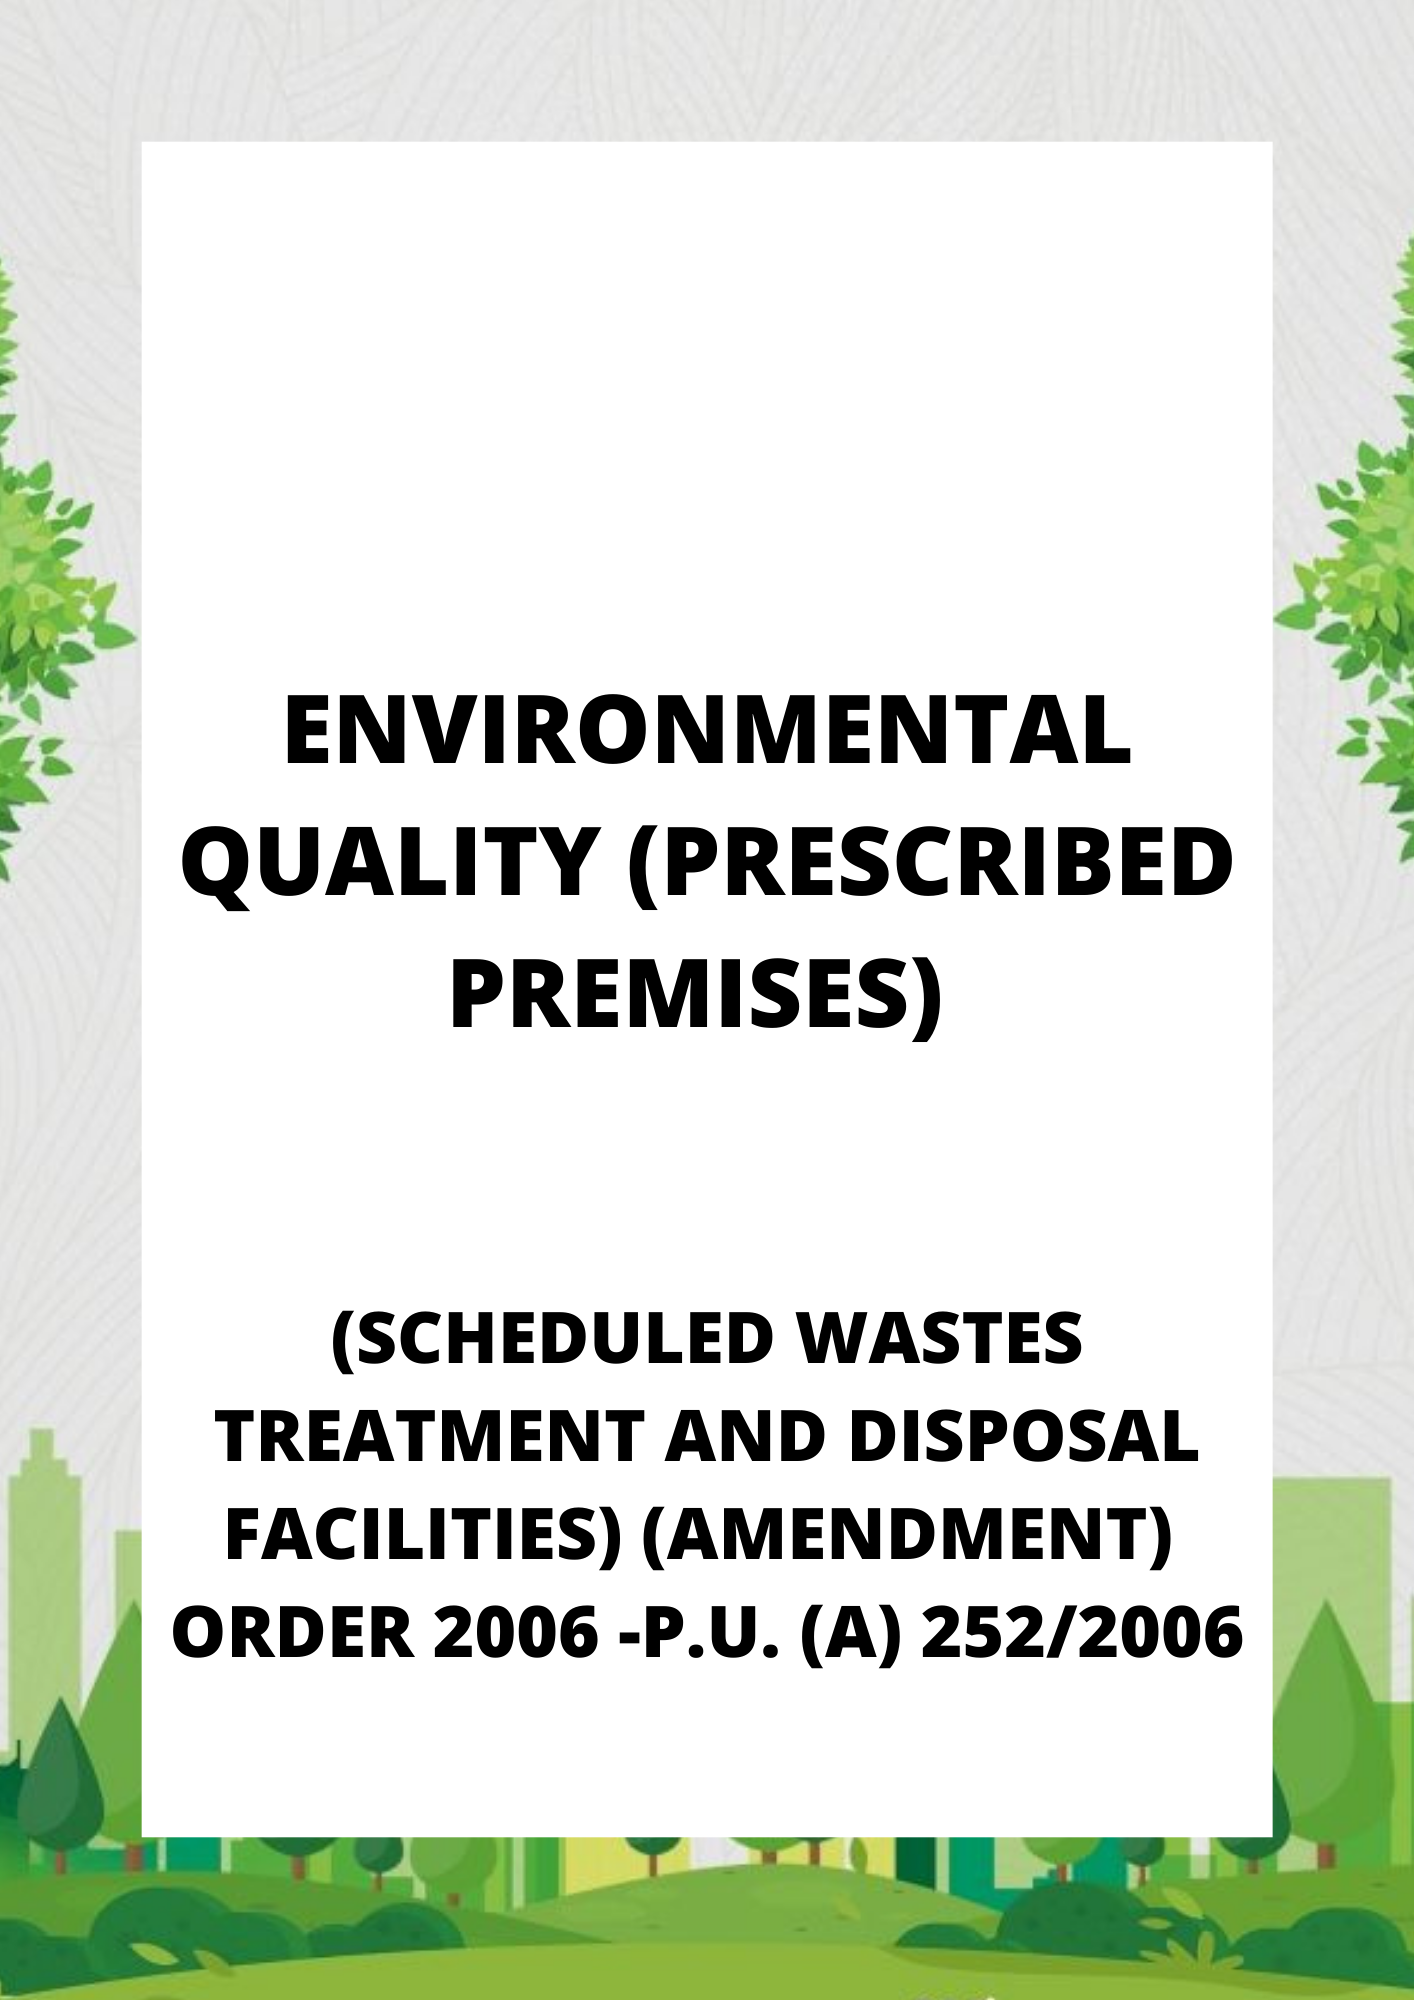 Environmental Quality (Prescribed Premises) (Scheduled Wastes Treatment and Disposal Facilities) (Amendment) Order 2006 -P.U. (A) 2522006